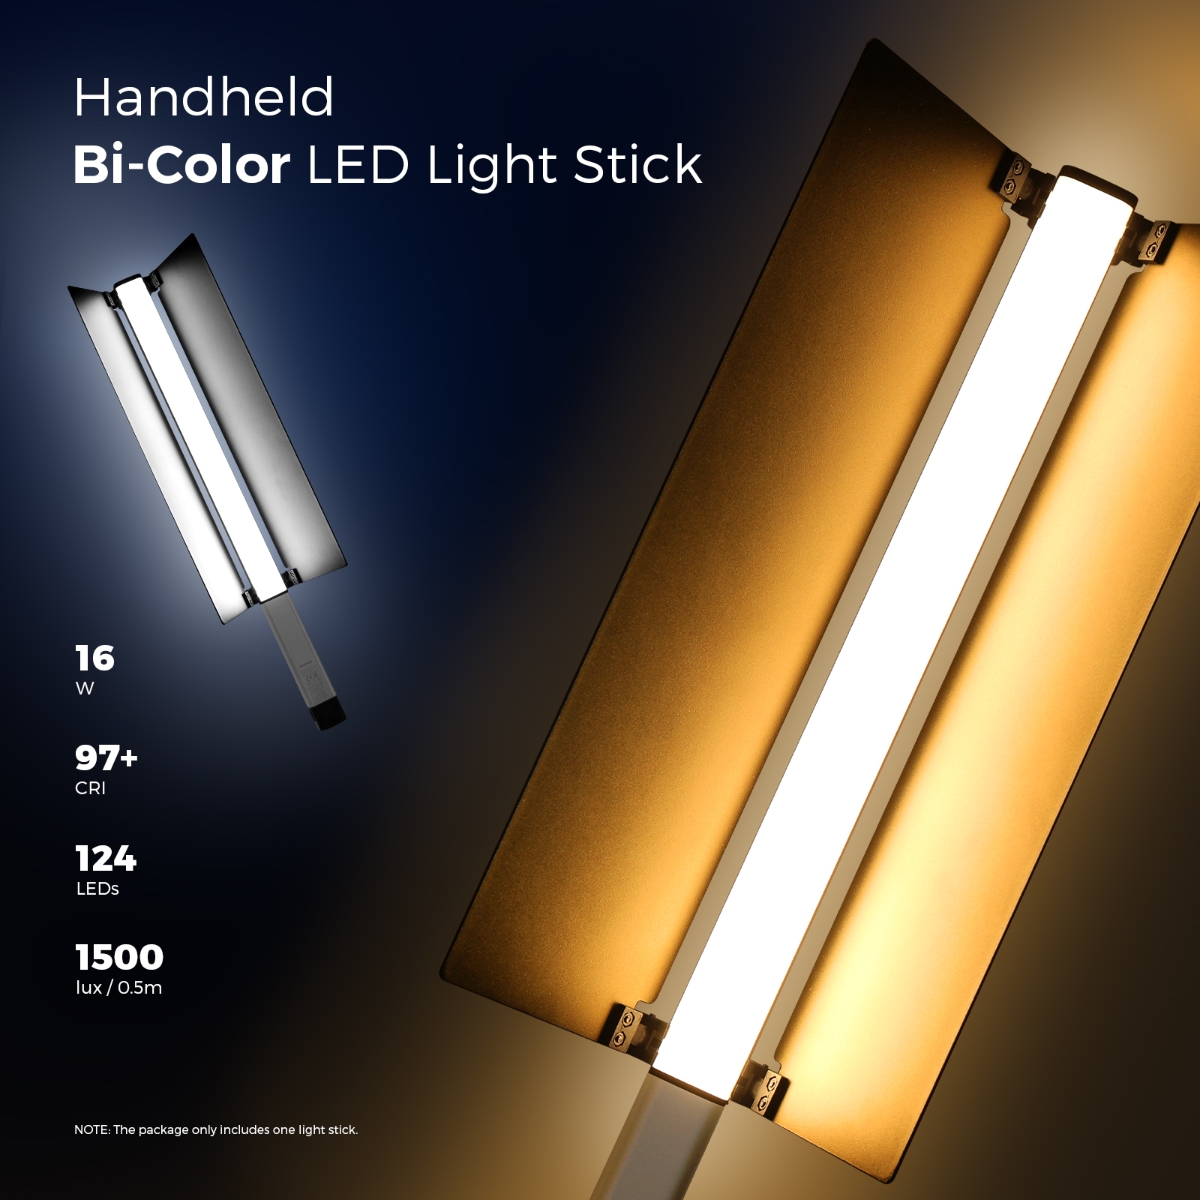 「Magilight」LED light stick